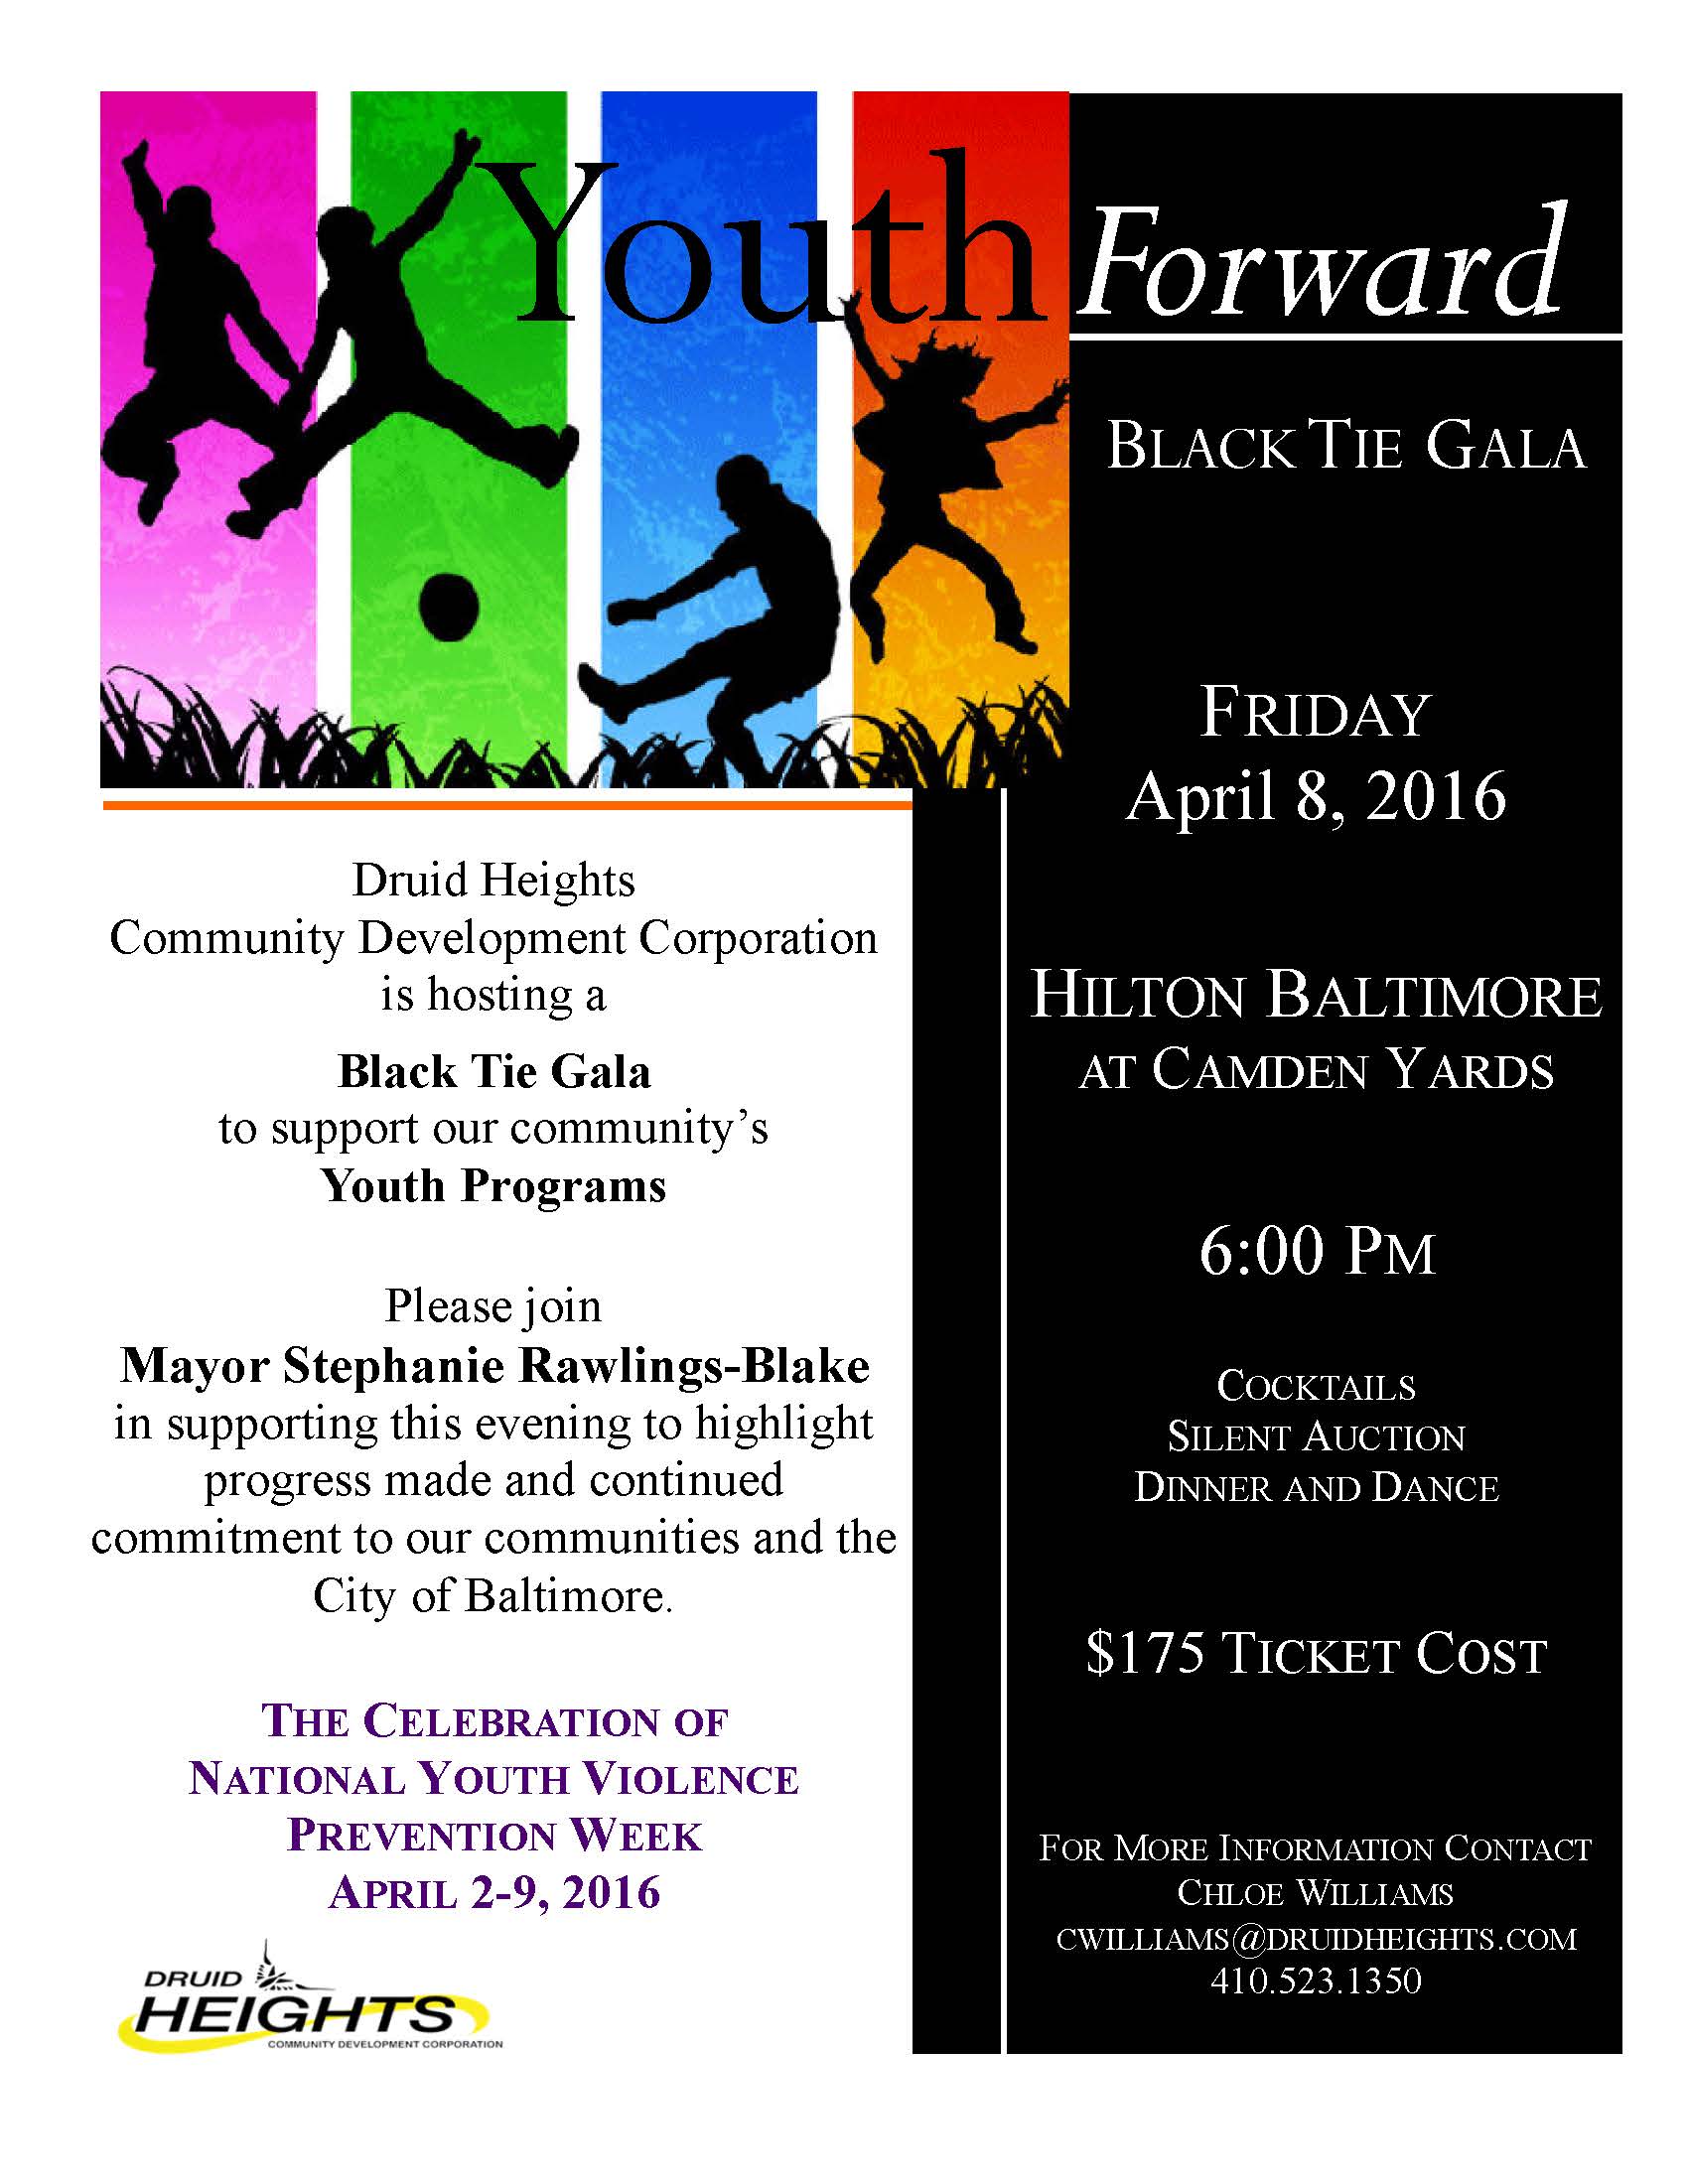 Black Tie Gala-Fundraiser / Friday,April 8th